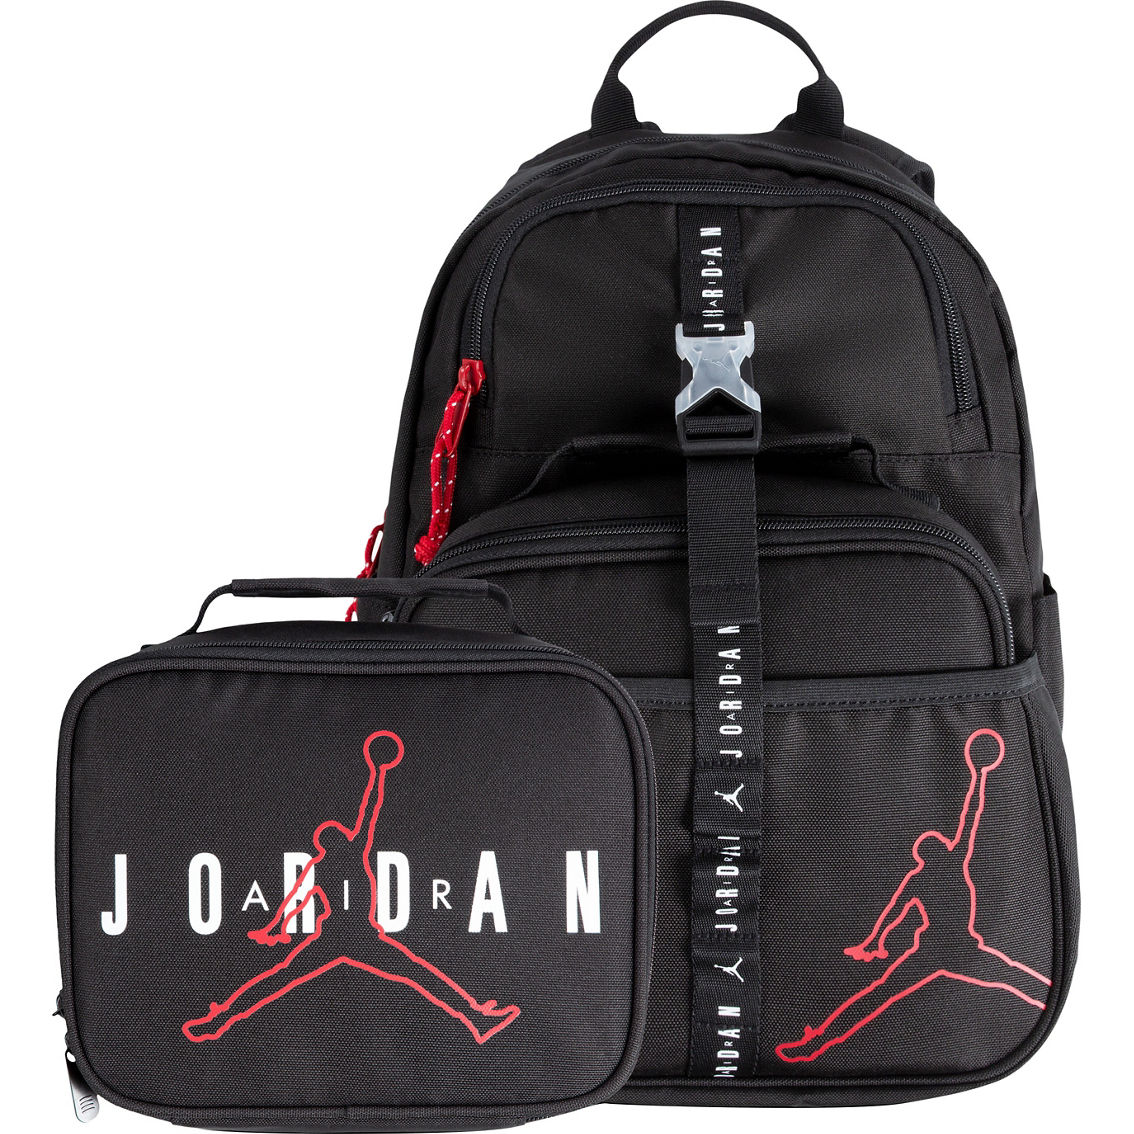 Jordan Air Jordan Lunch Backpack Duo | Backpacks | Clothing ...